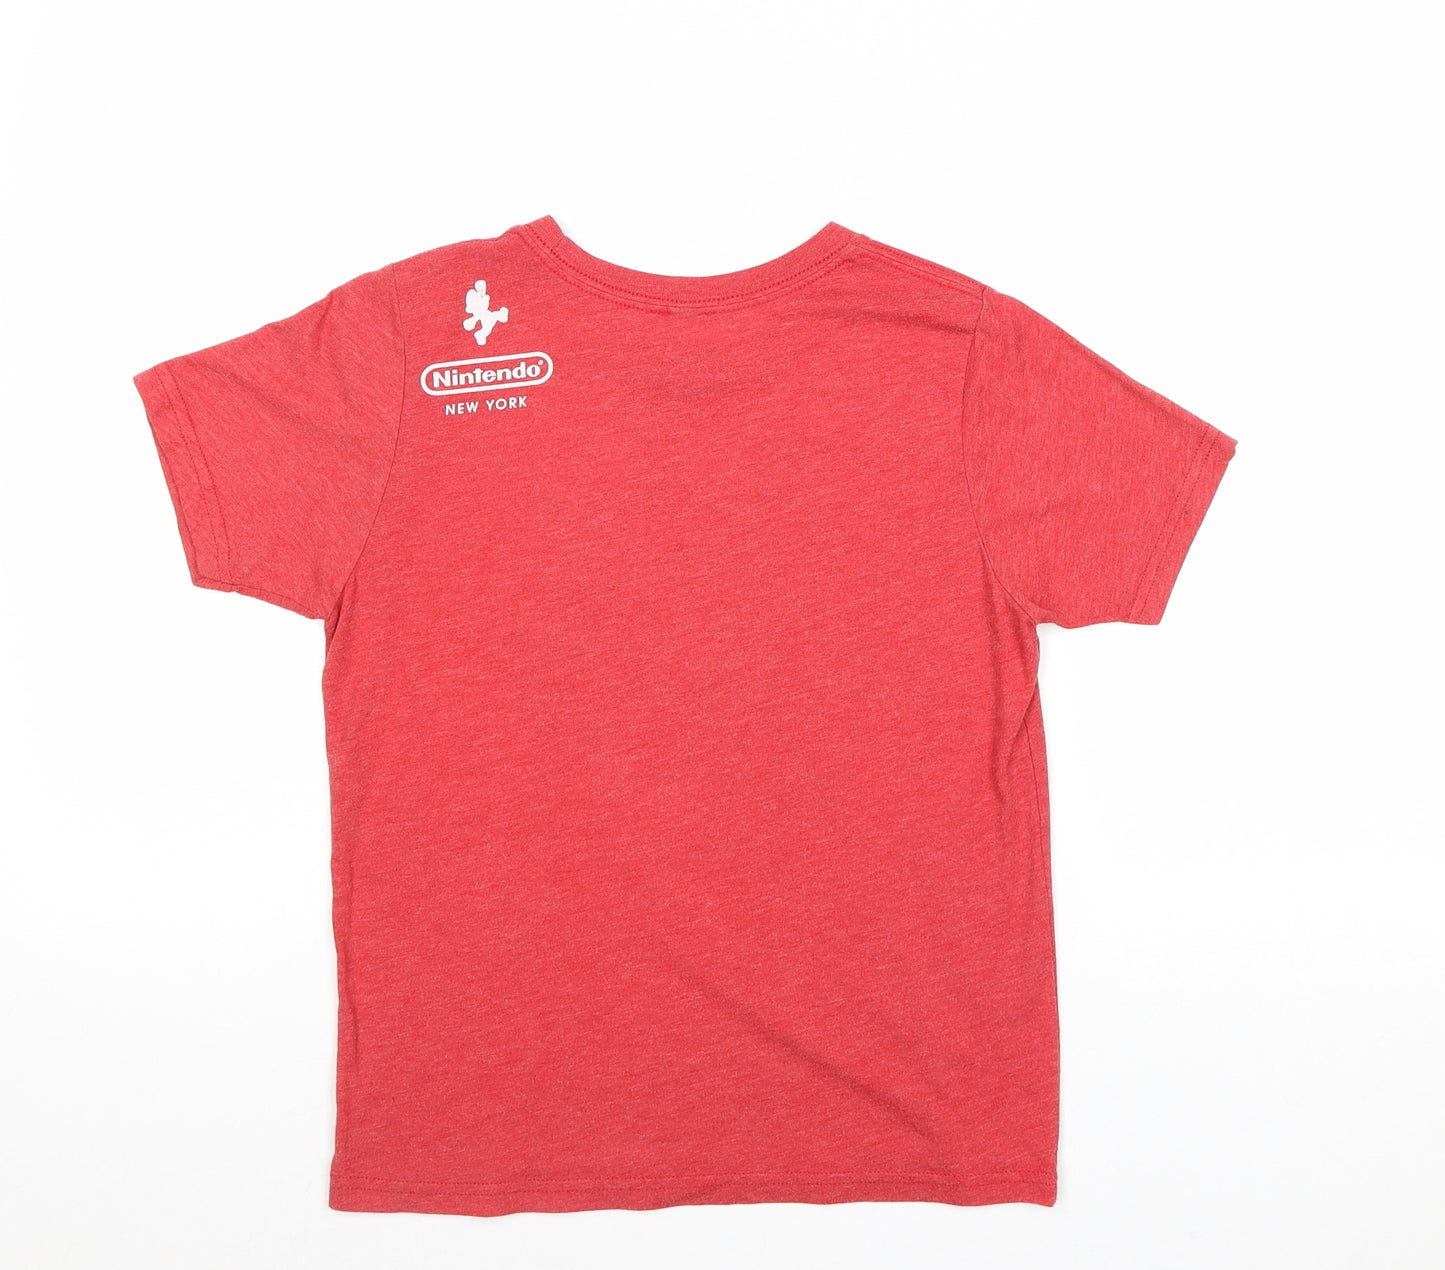 Nintendo Boys Red Cotton Basic T-Shirt Size M Round Neck Pullover - Super Mario